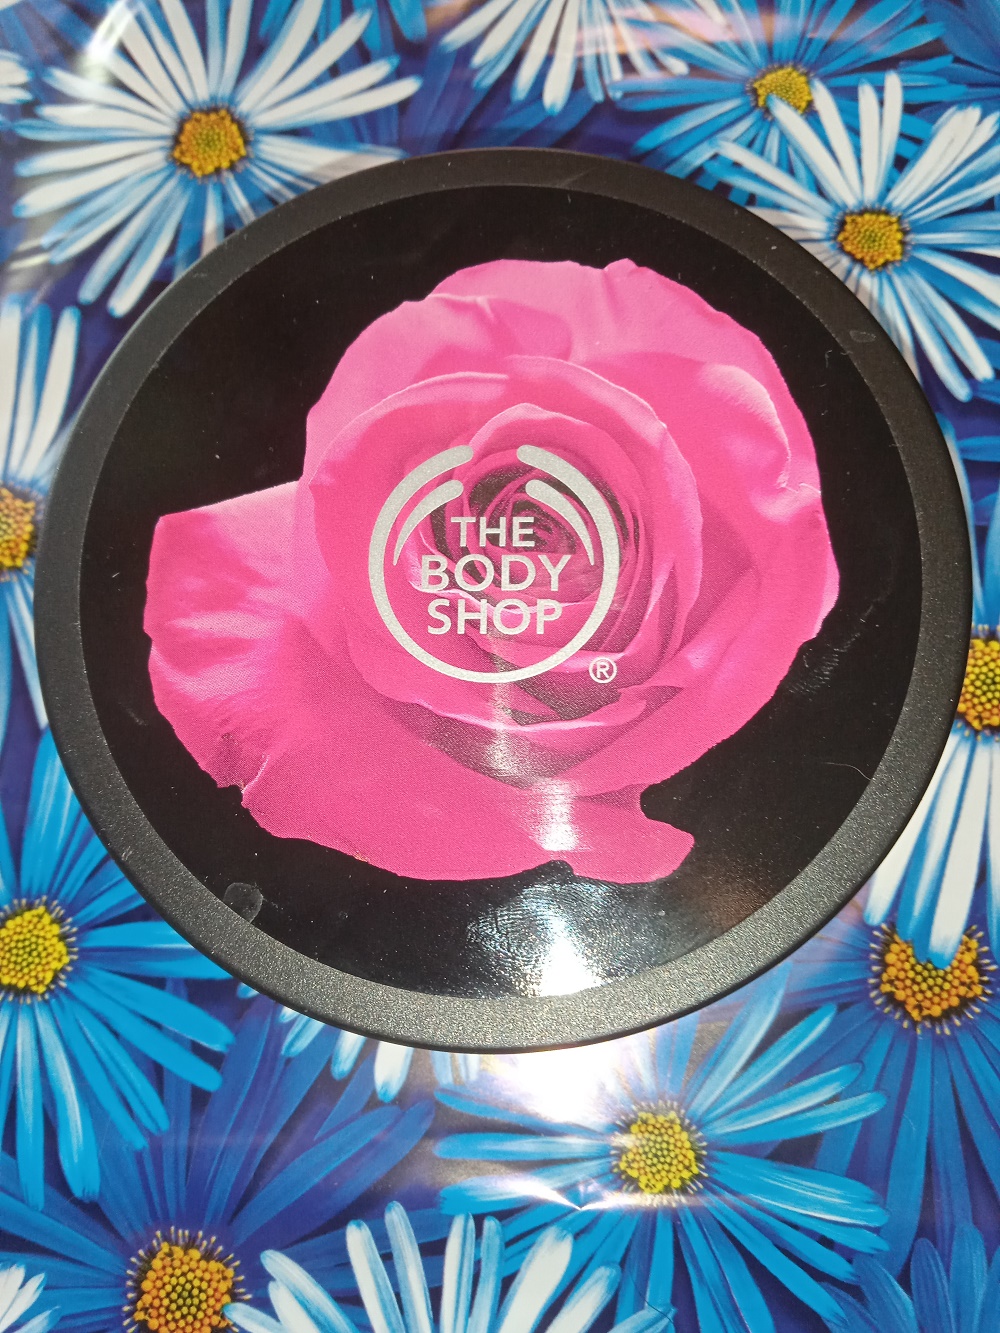 Крем для тела The Body Shop International Limited "Британская роза" фото